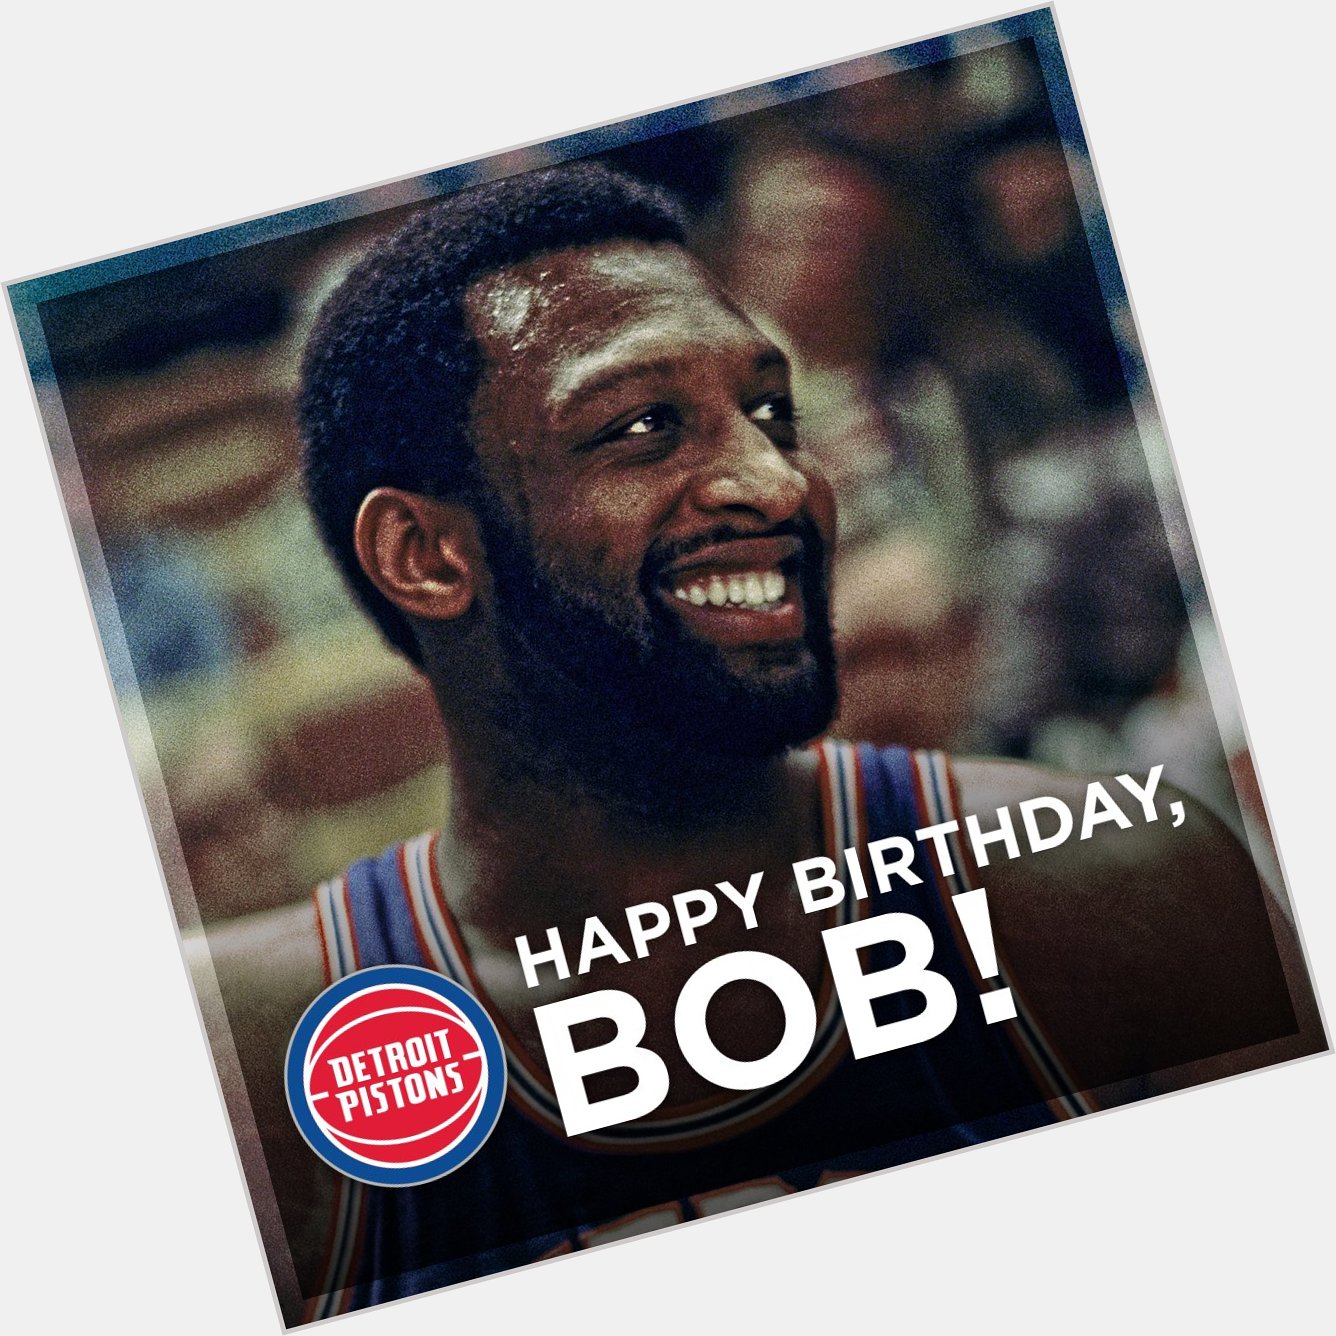 NBA \"DetroitPistons: Big day for birthdays.

Happy Birthday to the legendary Bob Lanier! 